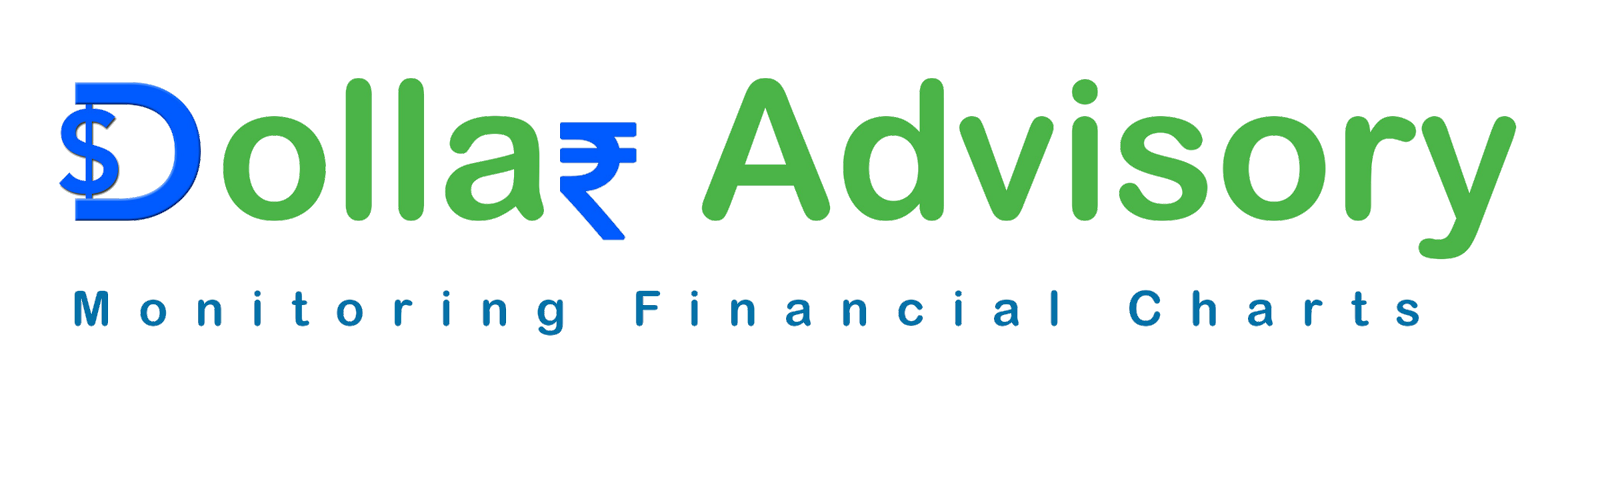 Dollar Advisory & Financial Services